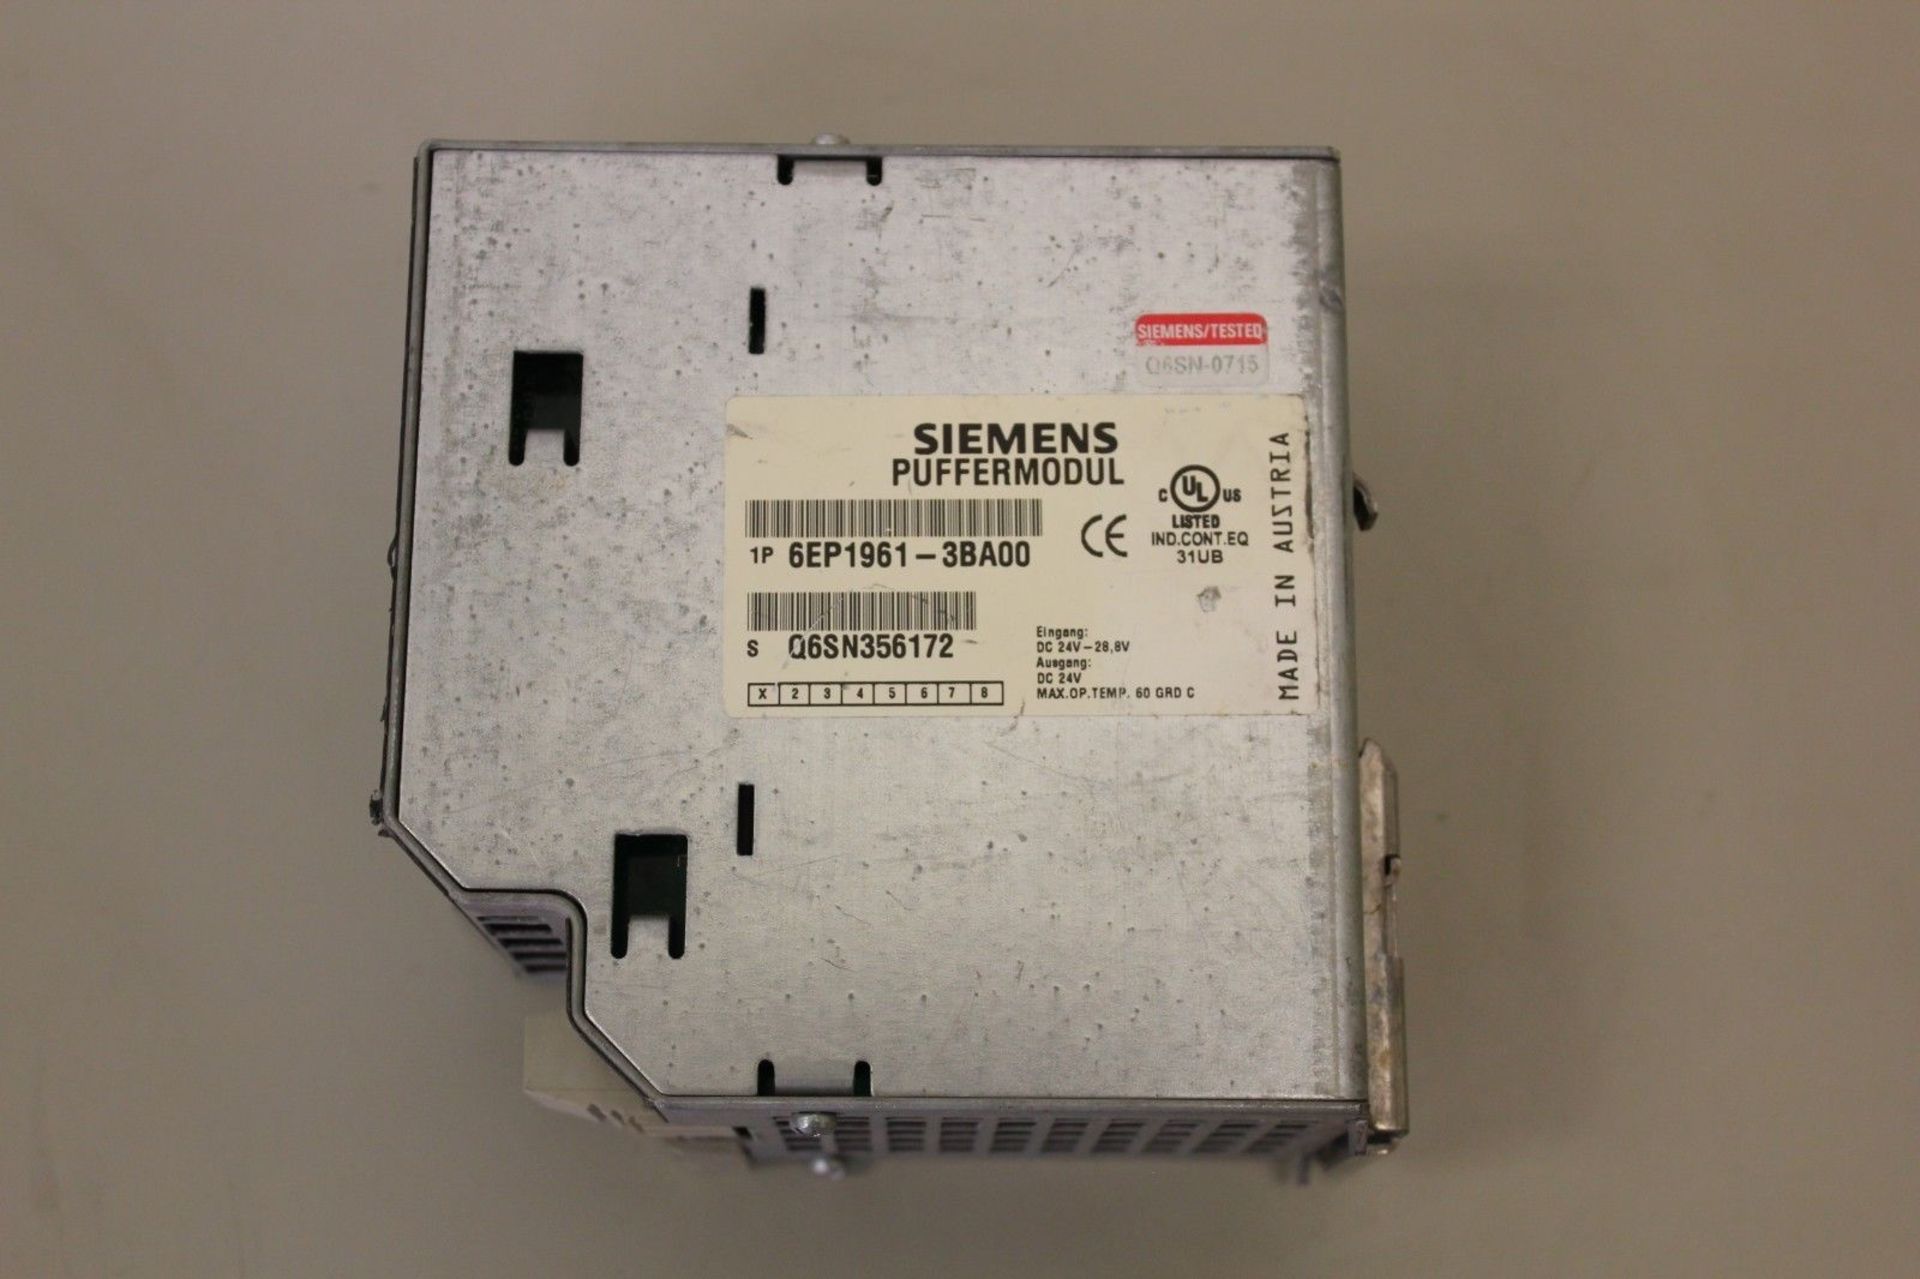 SIEMENS Sitop Puffer-Module - Image 2 of 2